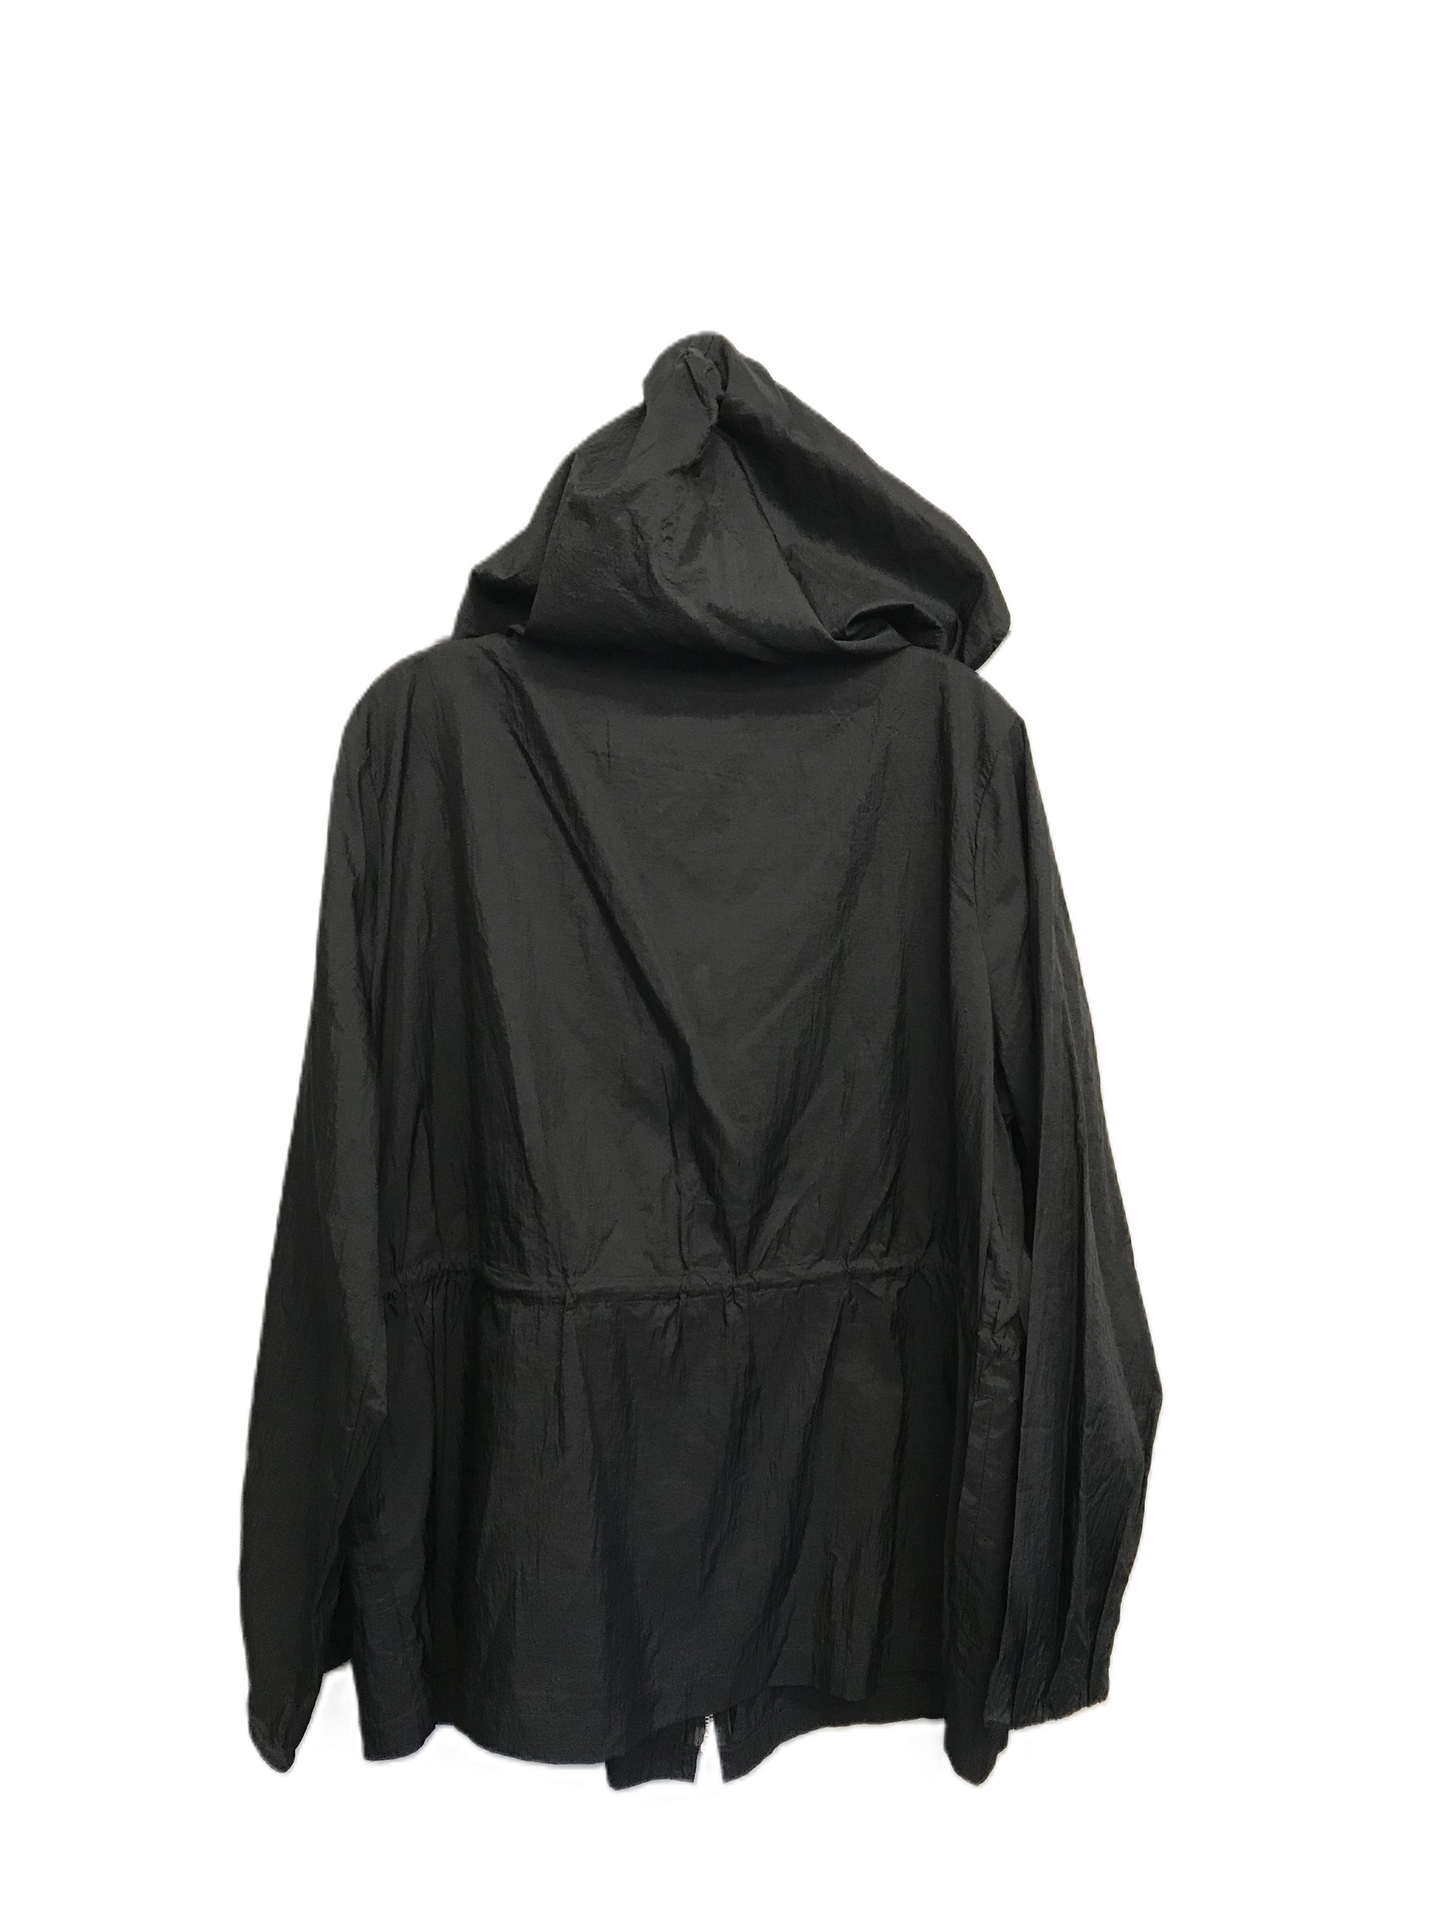 Black Jacket Windbreaker By Soma, Size: 1x